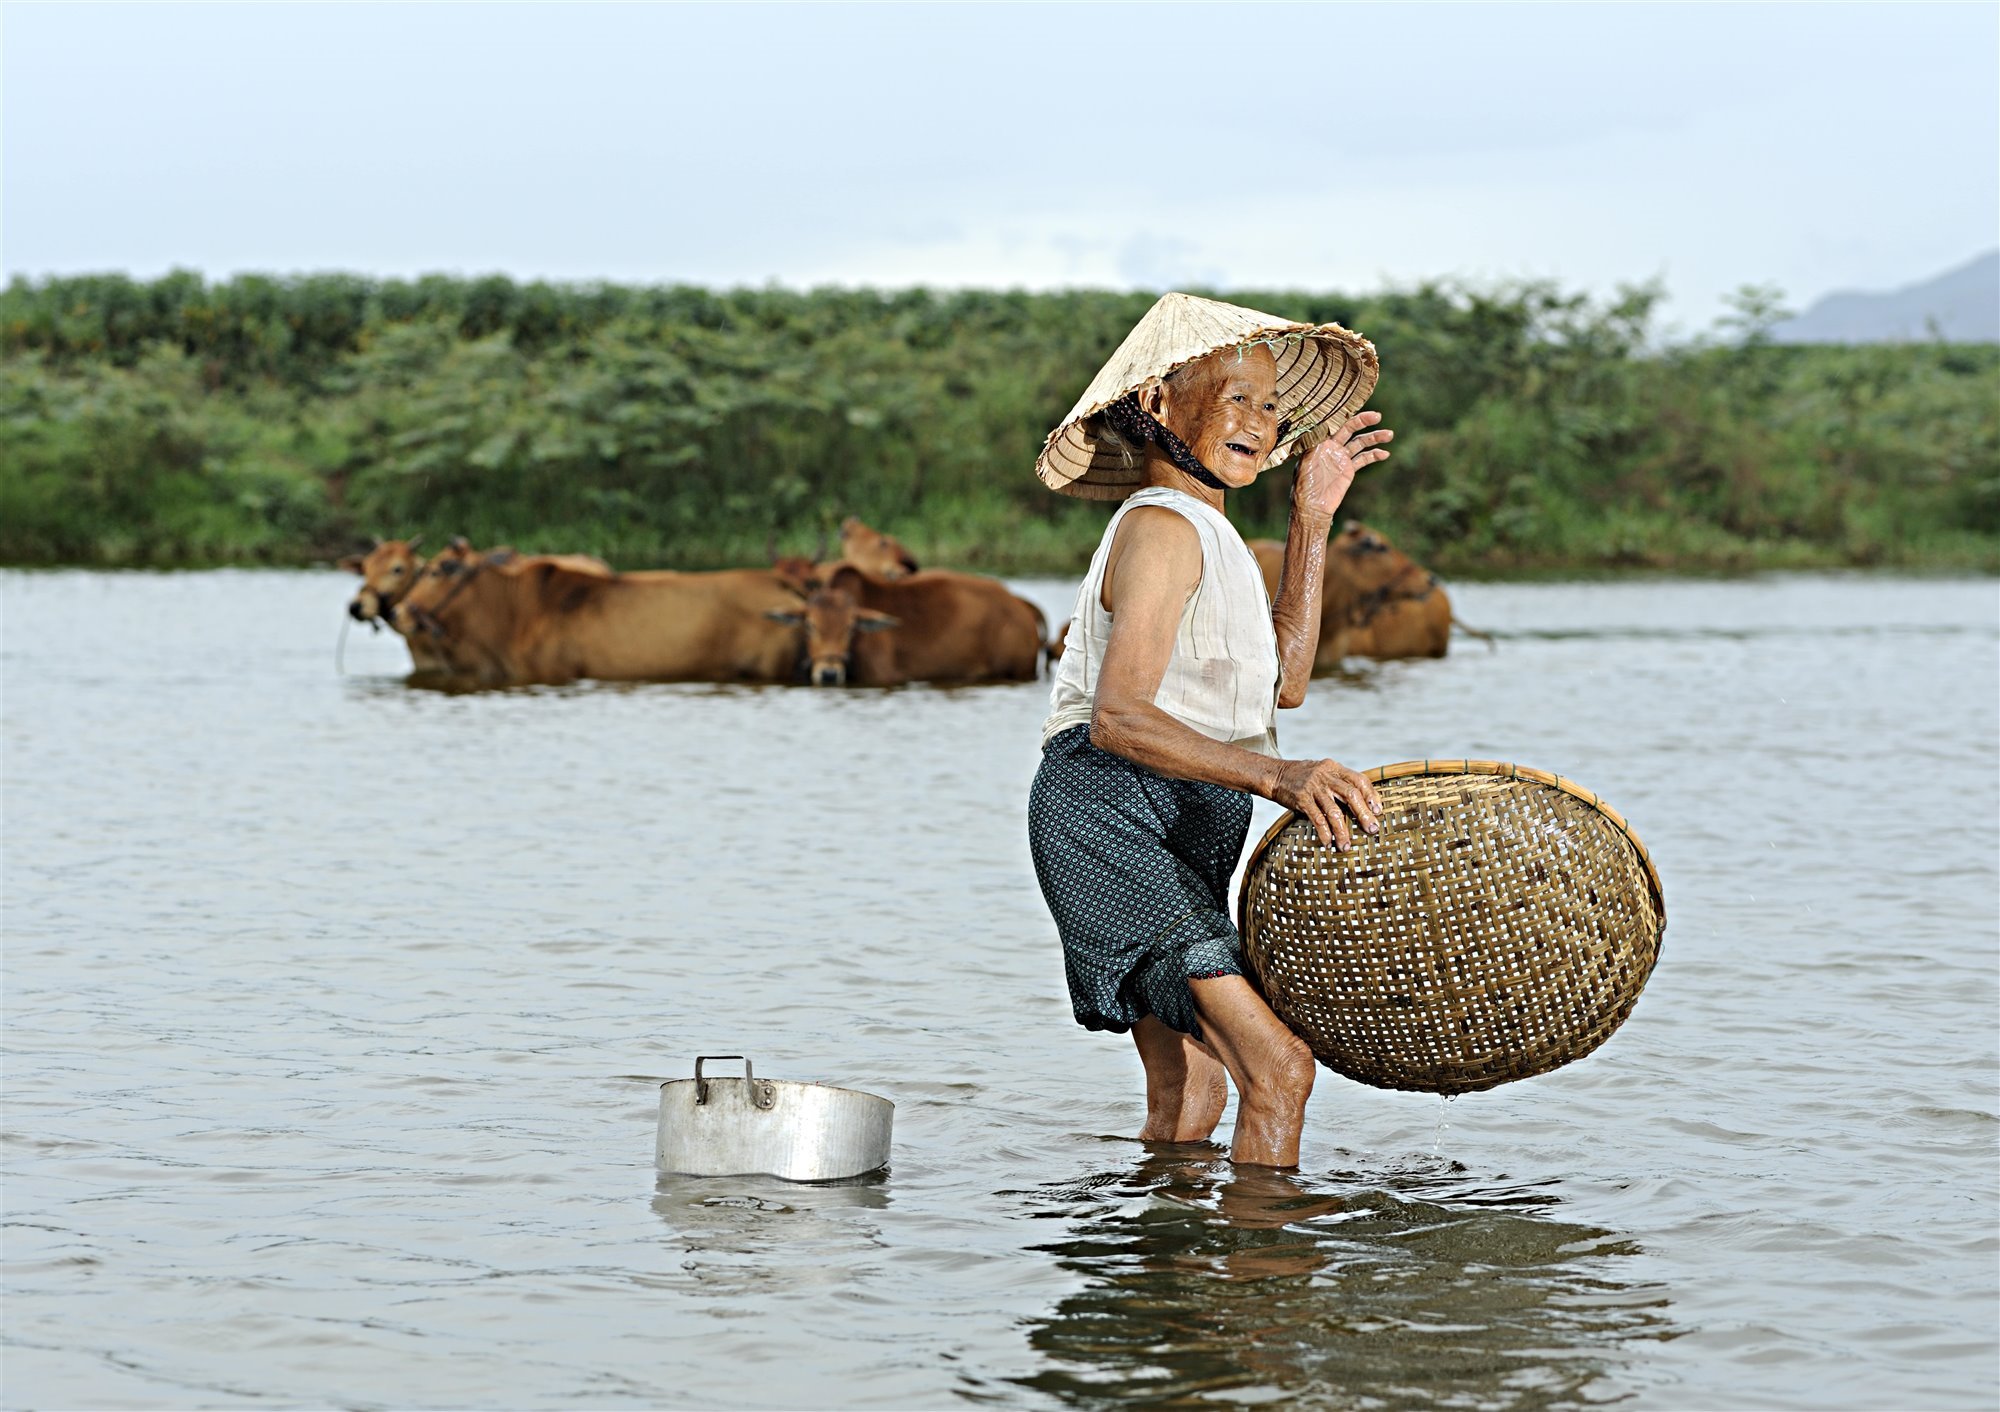 Sitting for Shellfish in the Gulf of Tonkin, Vietnam